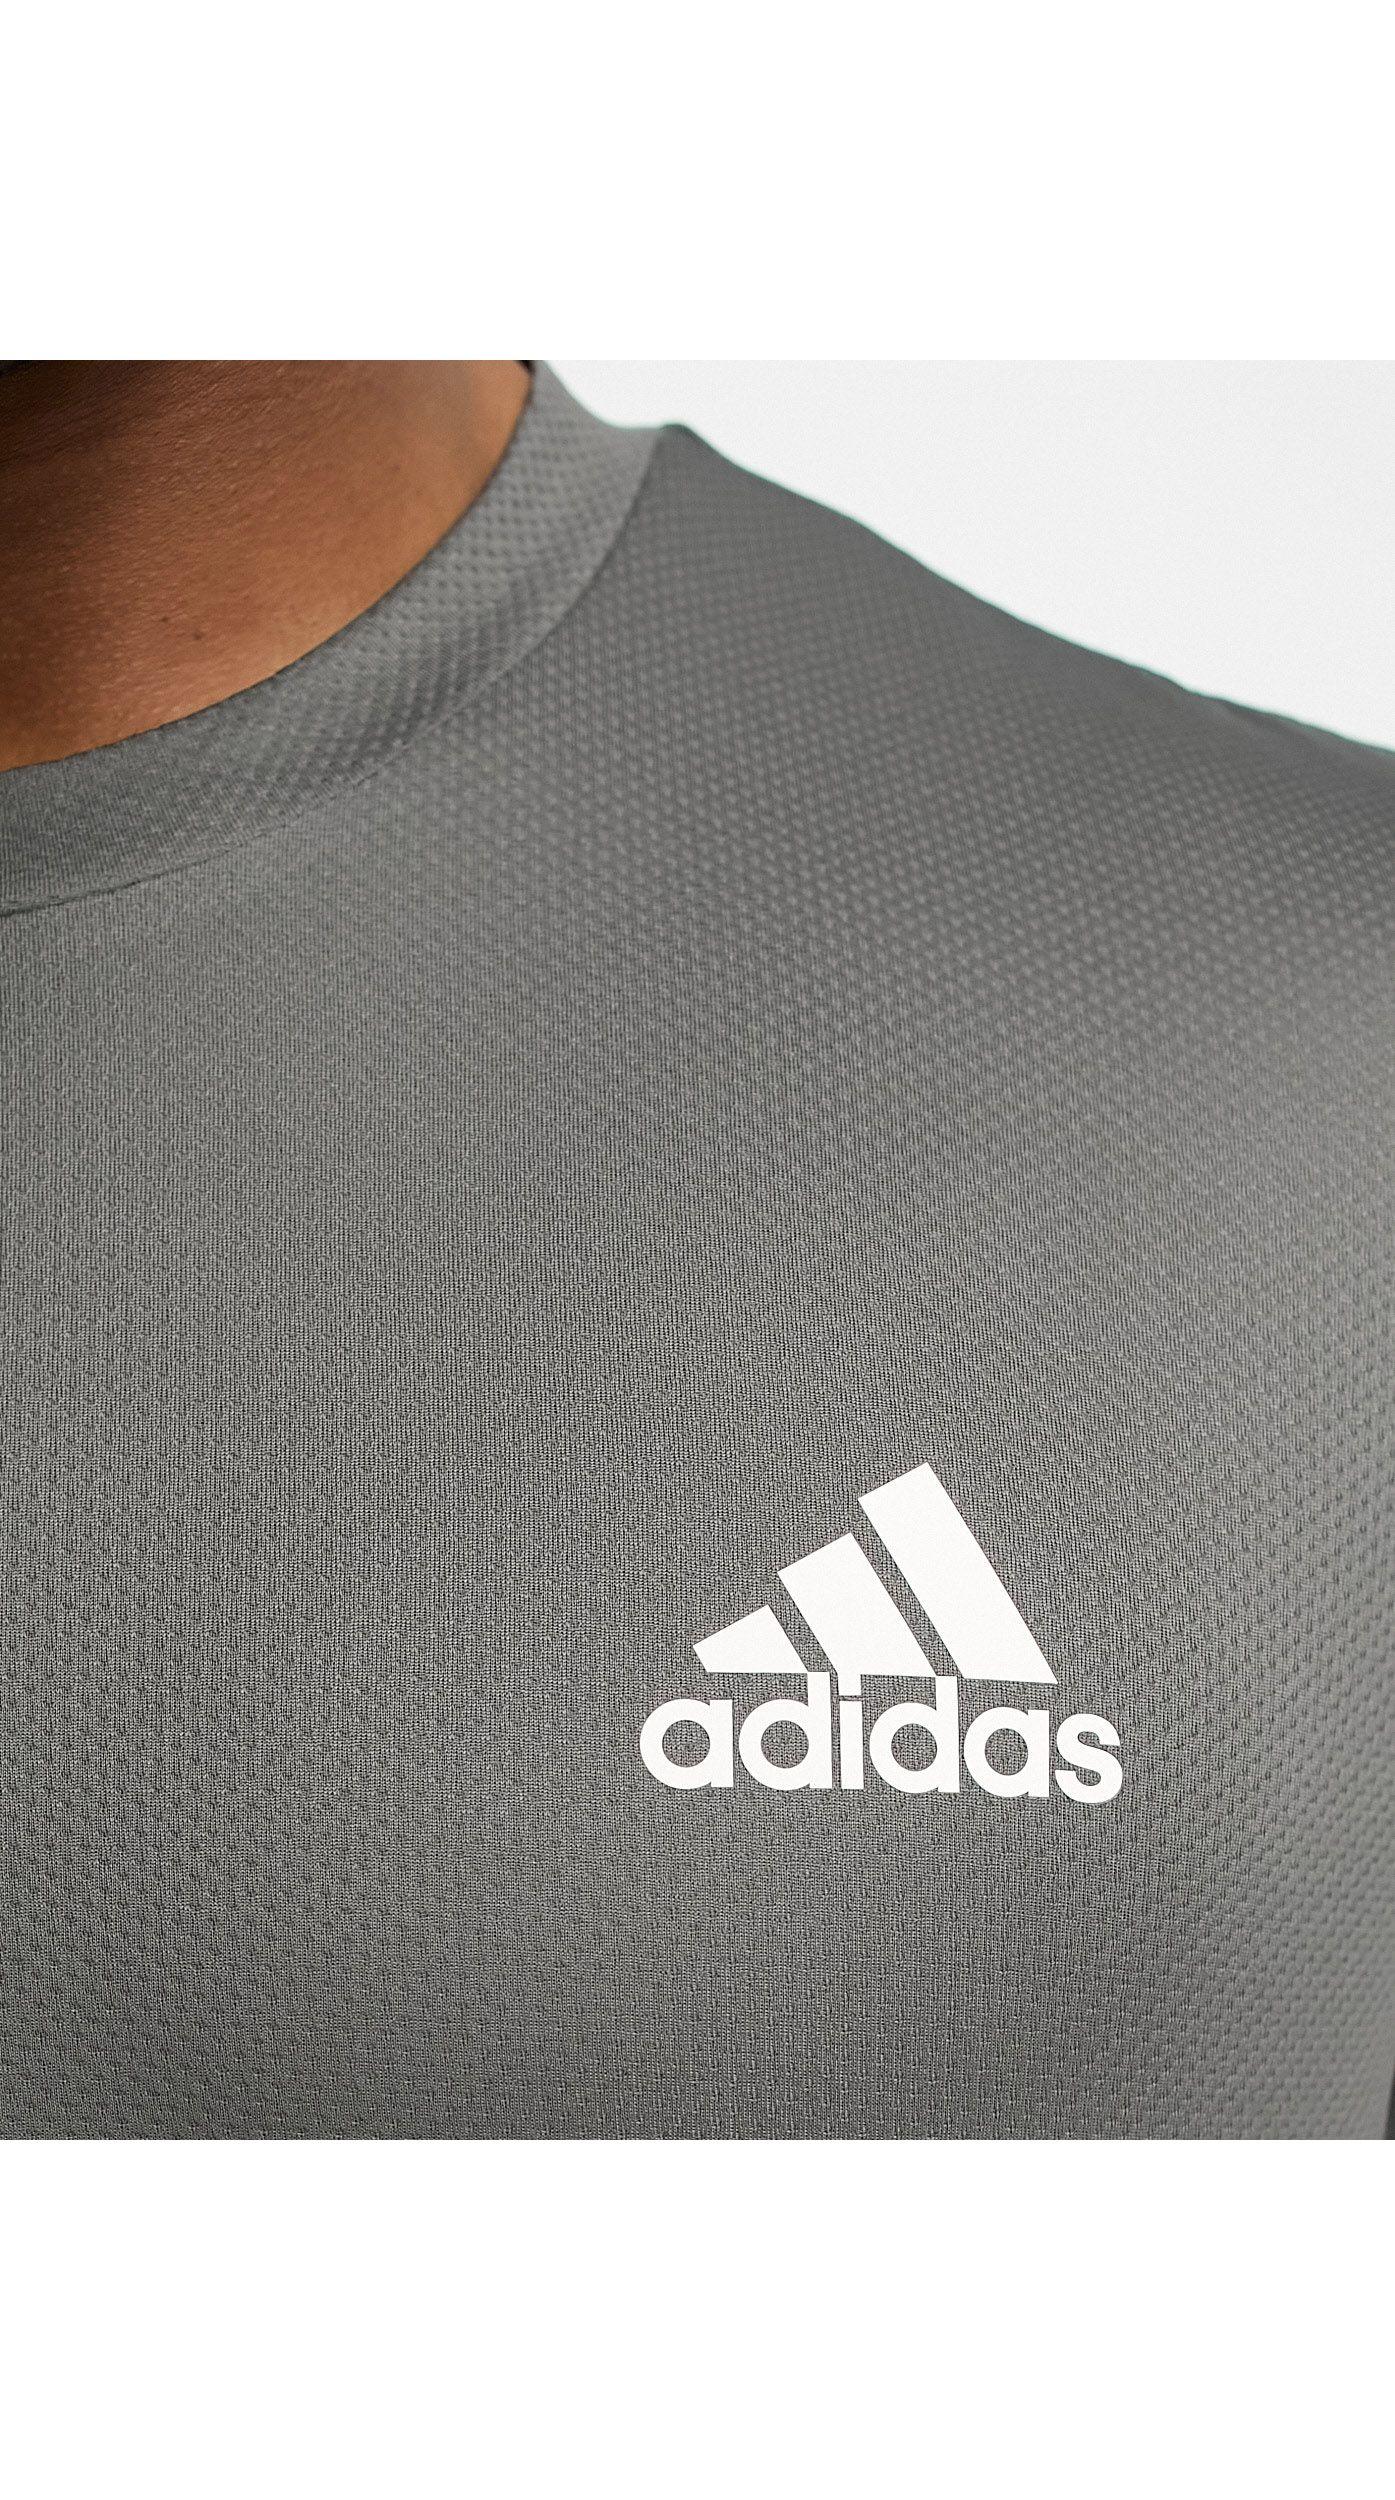 adidas Originals Adidas Training Design For Movement T-shirt in Black for  Men | Lyst